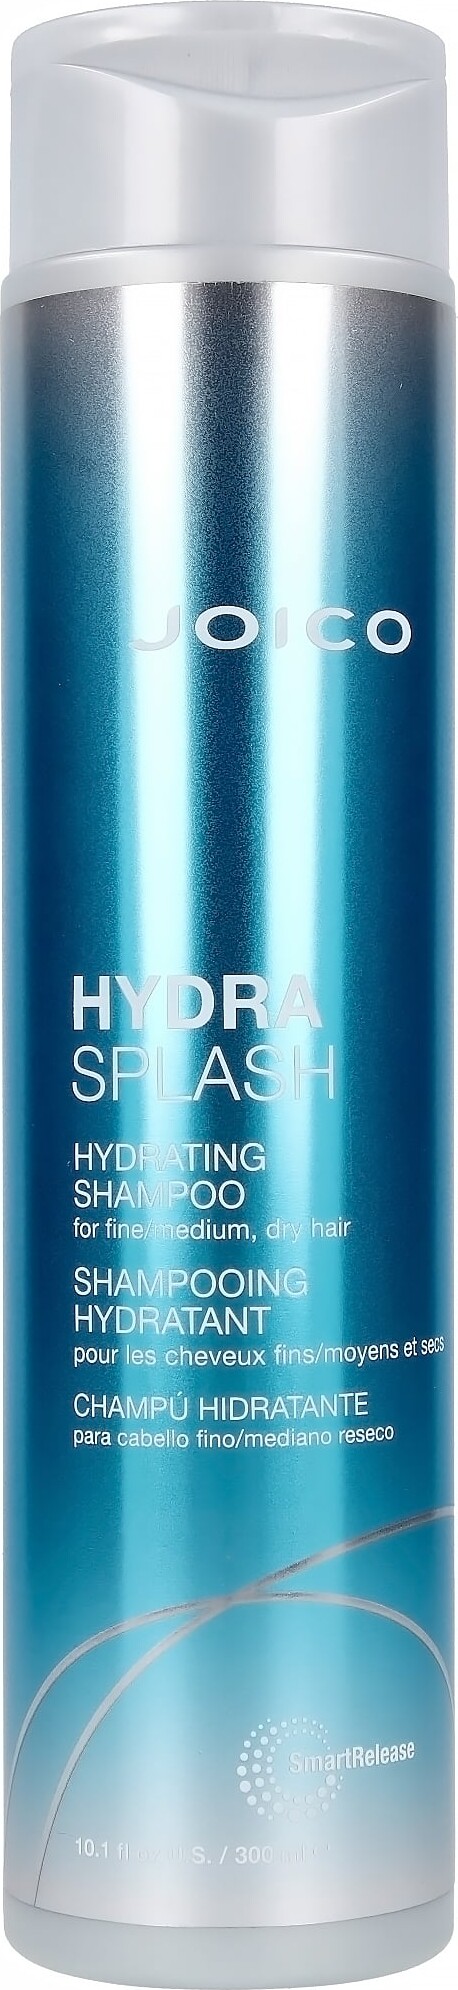 Billede af Joico - Hydra Splash Hydrating Shampoo 300 Ml hos Gucca.dk